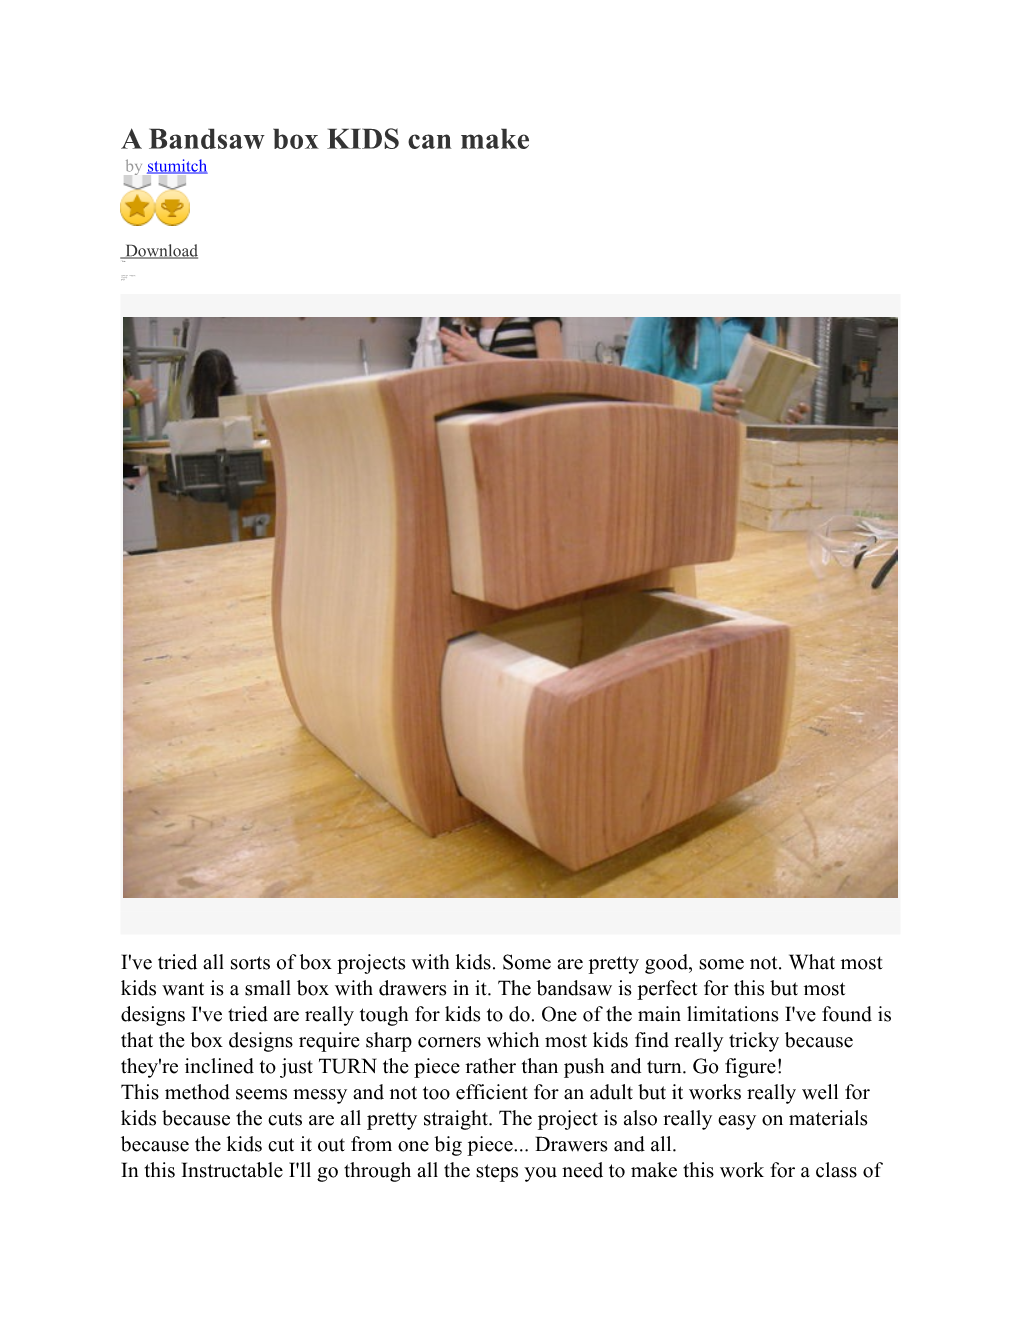 A Bandsaw Box KIDS Can Make